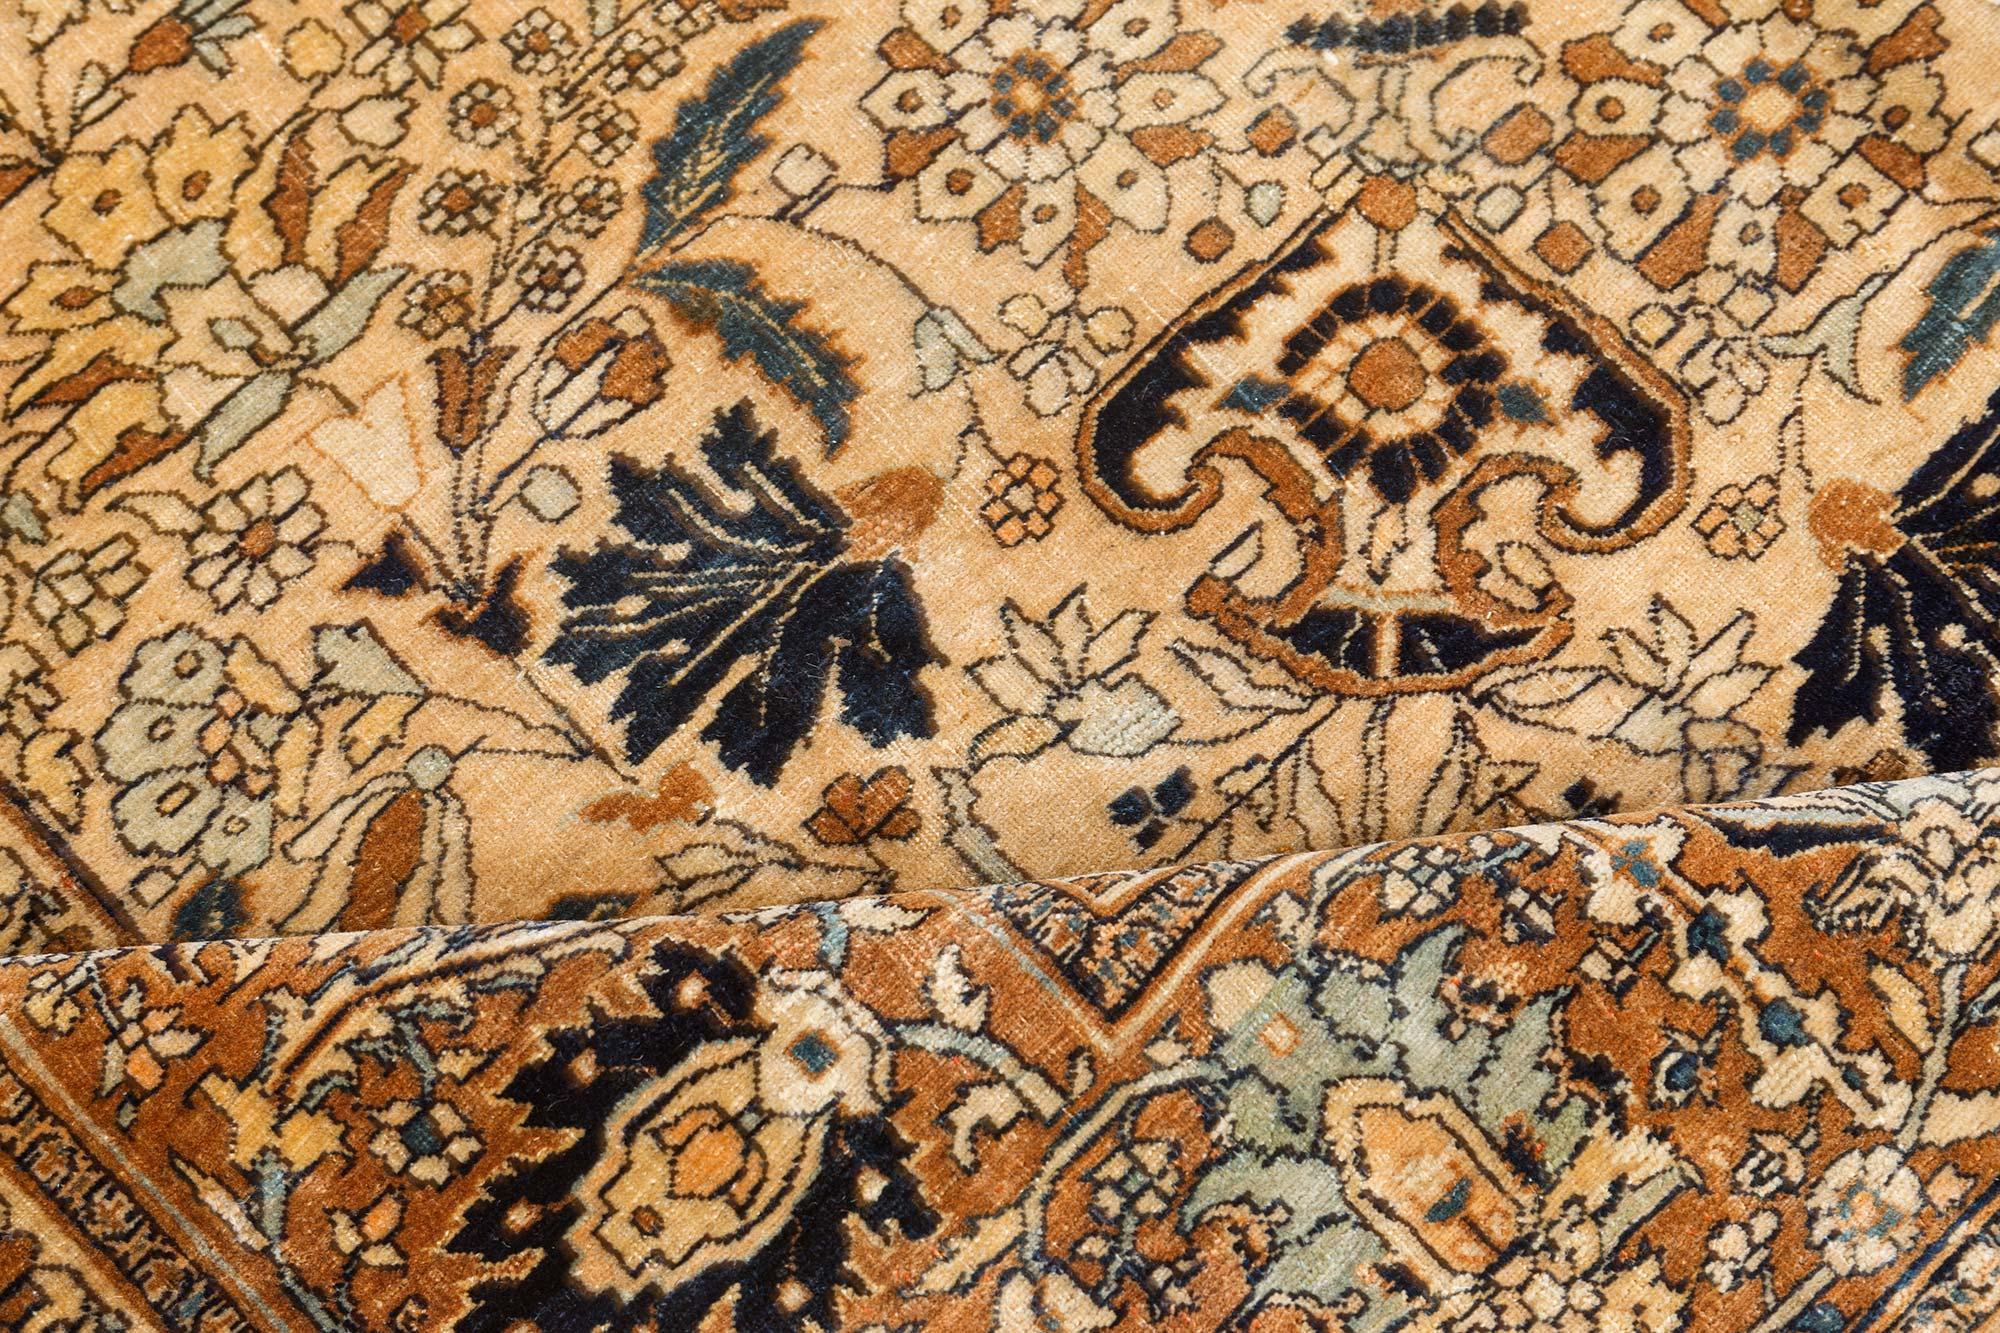 Antique Persian Tabriz Botanic design handmade wool carpet
Size: 11'4